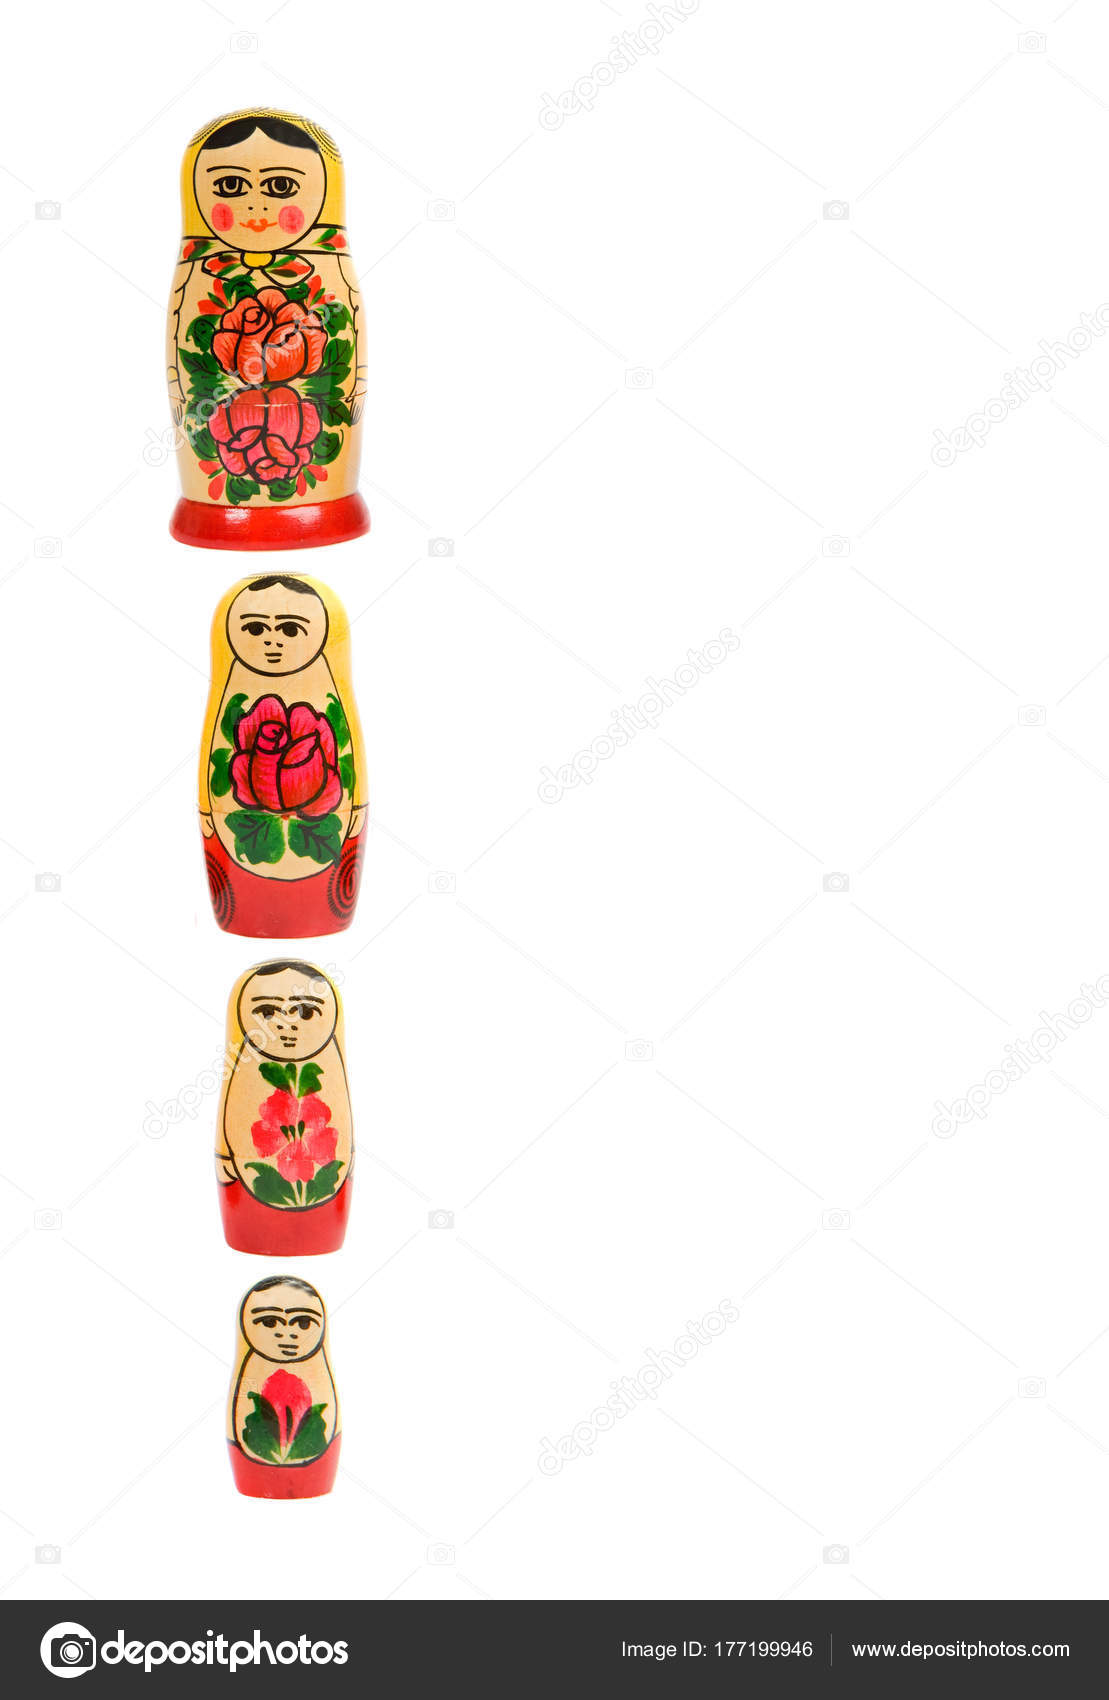 https://st3.depositphotos.com/1465849/17719/i/1600/depositphotos_177199946-stock-photo-russian-matryoshka-dolls-vertical-row.jpg